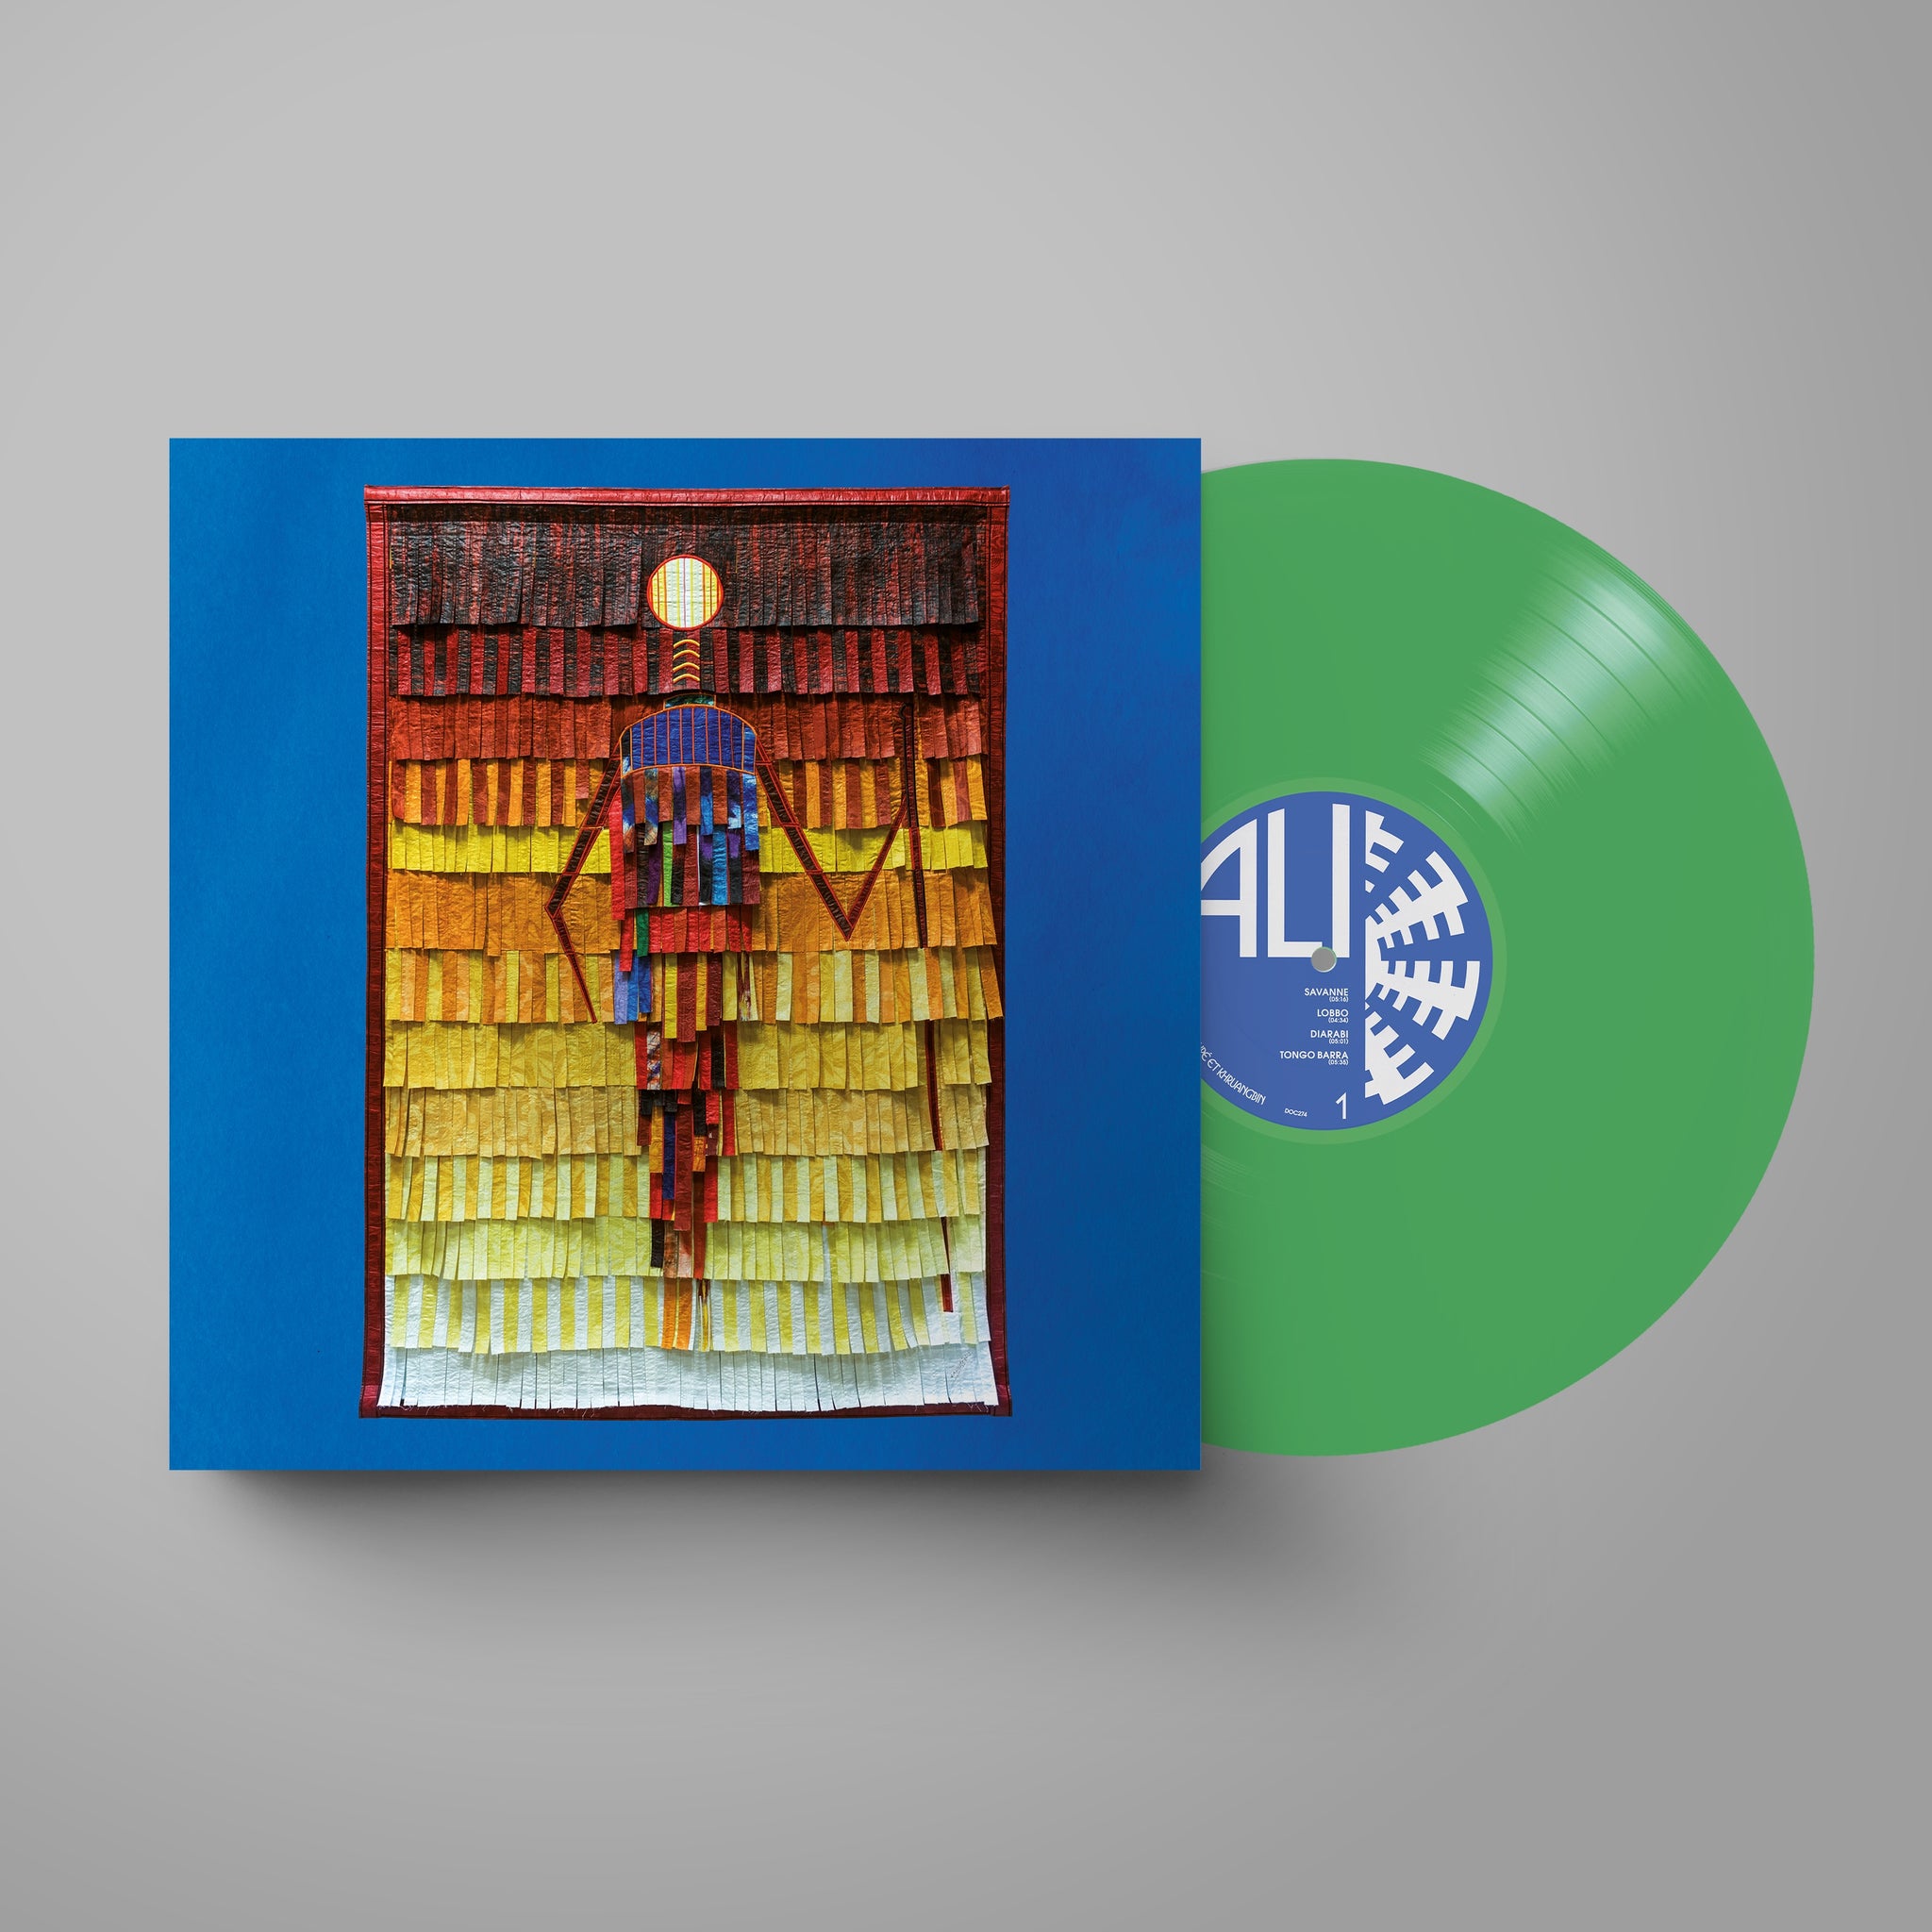 Vieux Farka Touré & Khruangbin - Ali - New LP Record Dead Oceans Jade Vinyl - Psychedelic Rock / Desert Blues / Funk